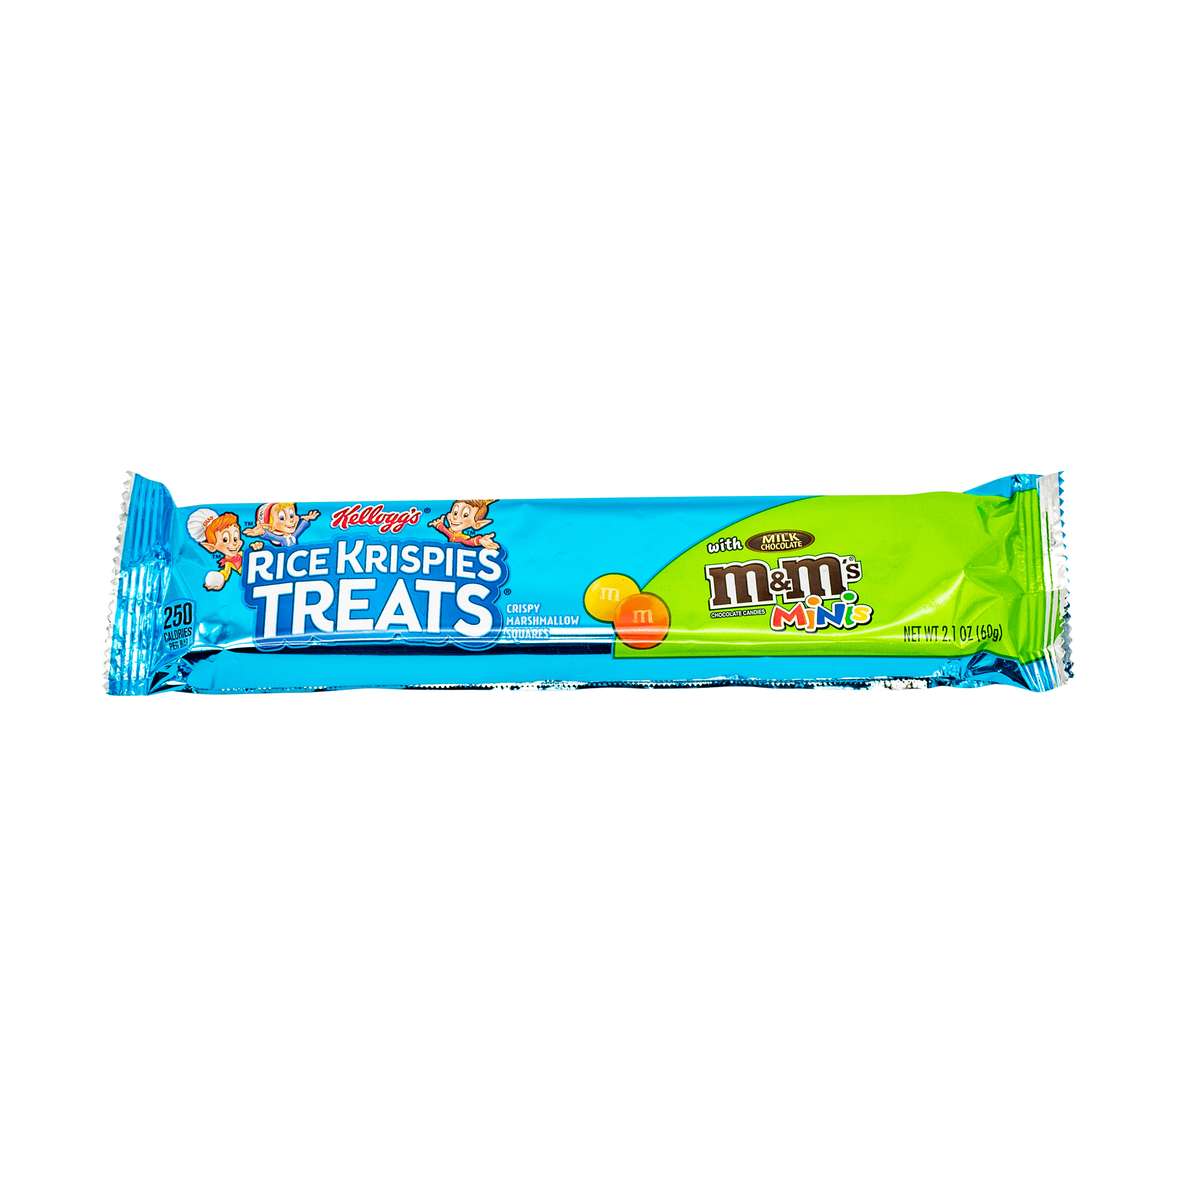 M&M'S Minis & Crispy Rice Chocolate Candy Bar